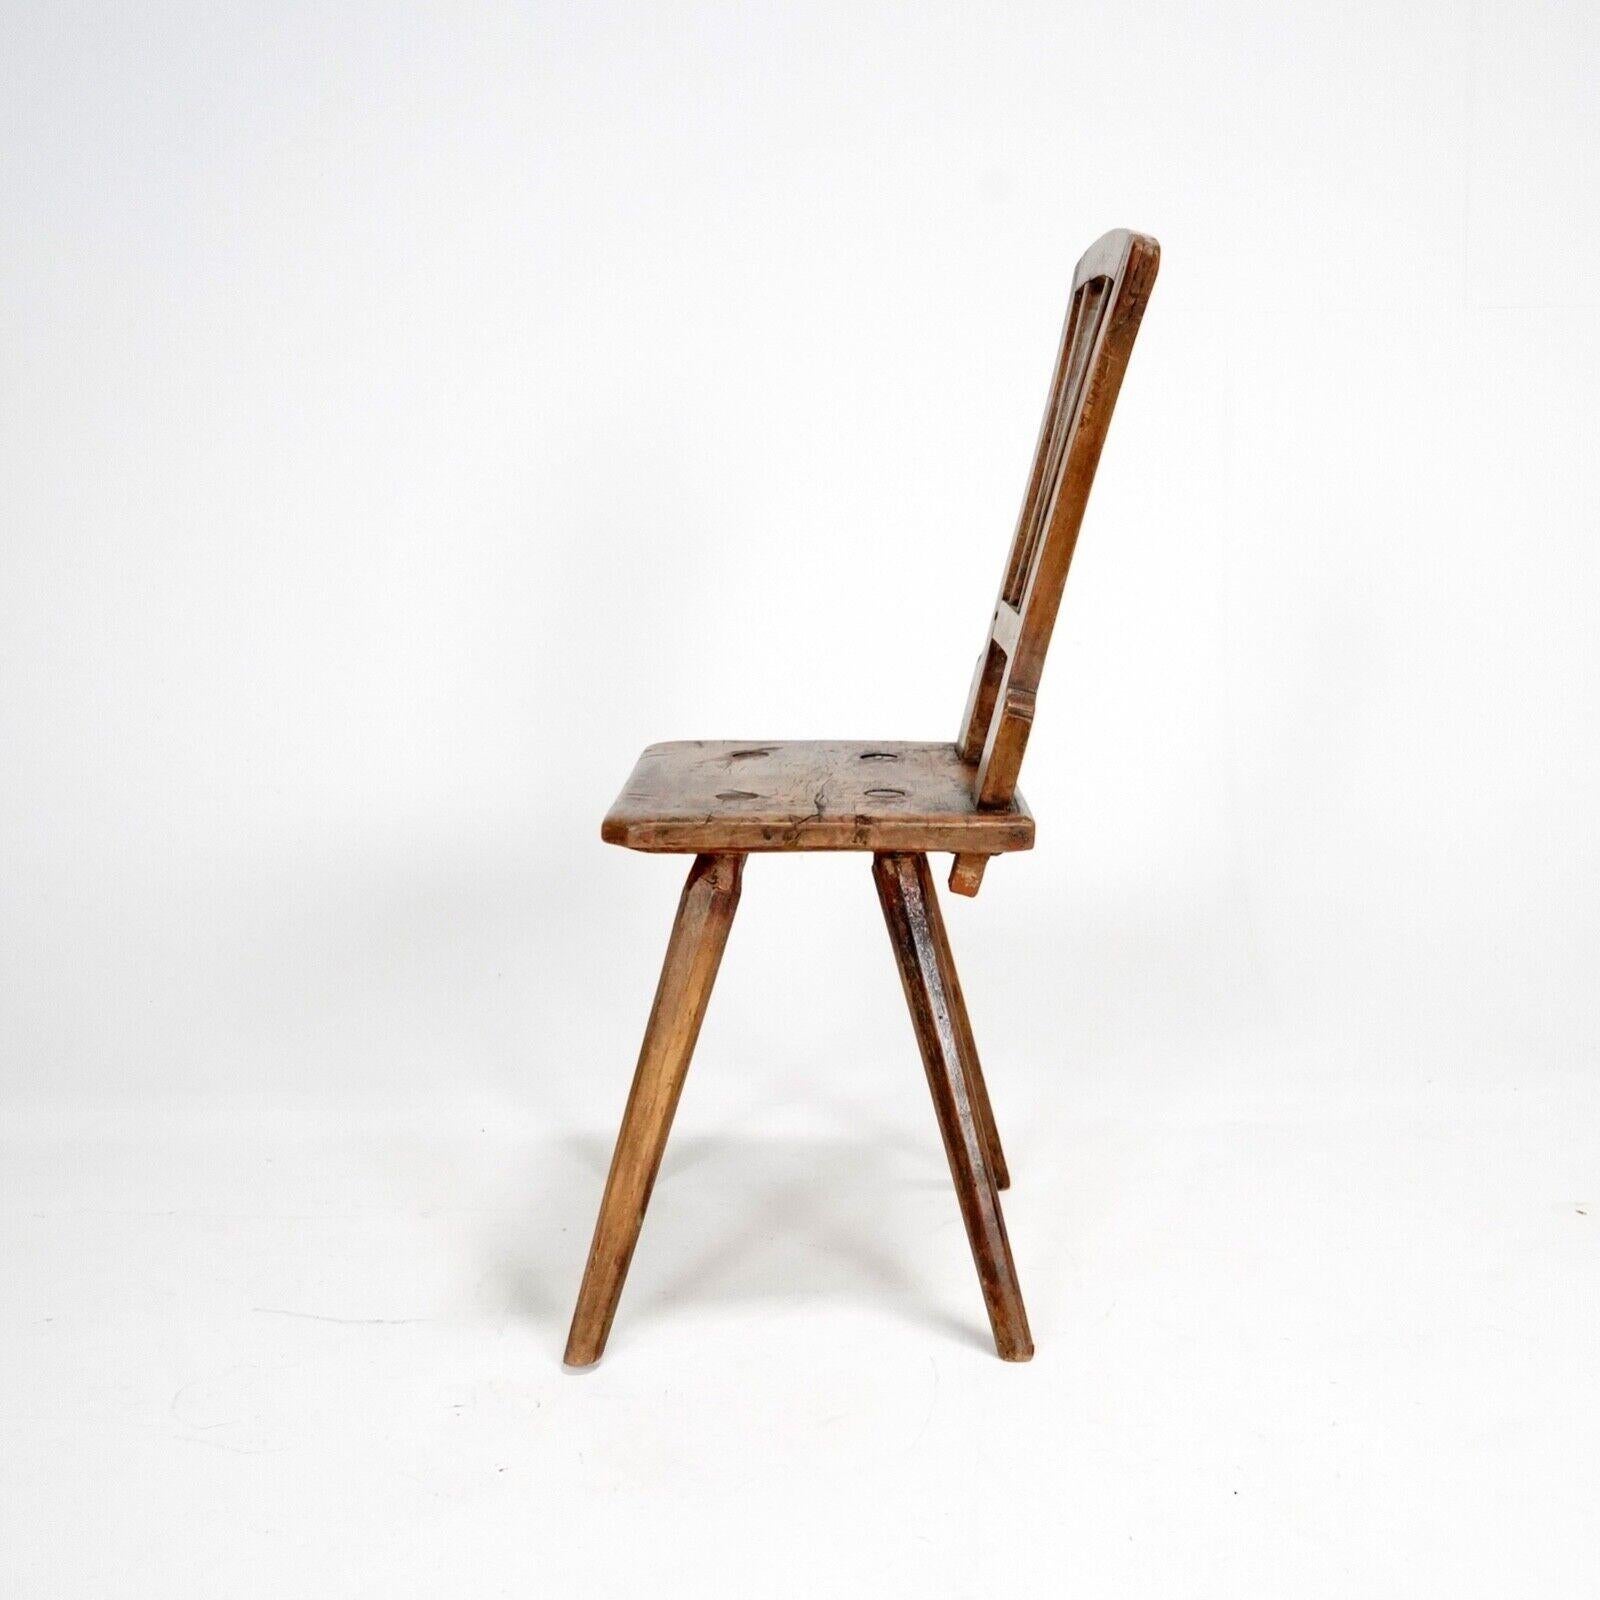 Rustic Antique 19th Century Primitive Wooden Stick Back Chair